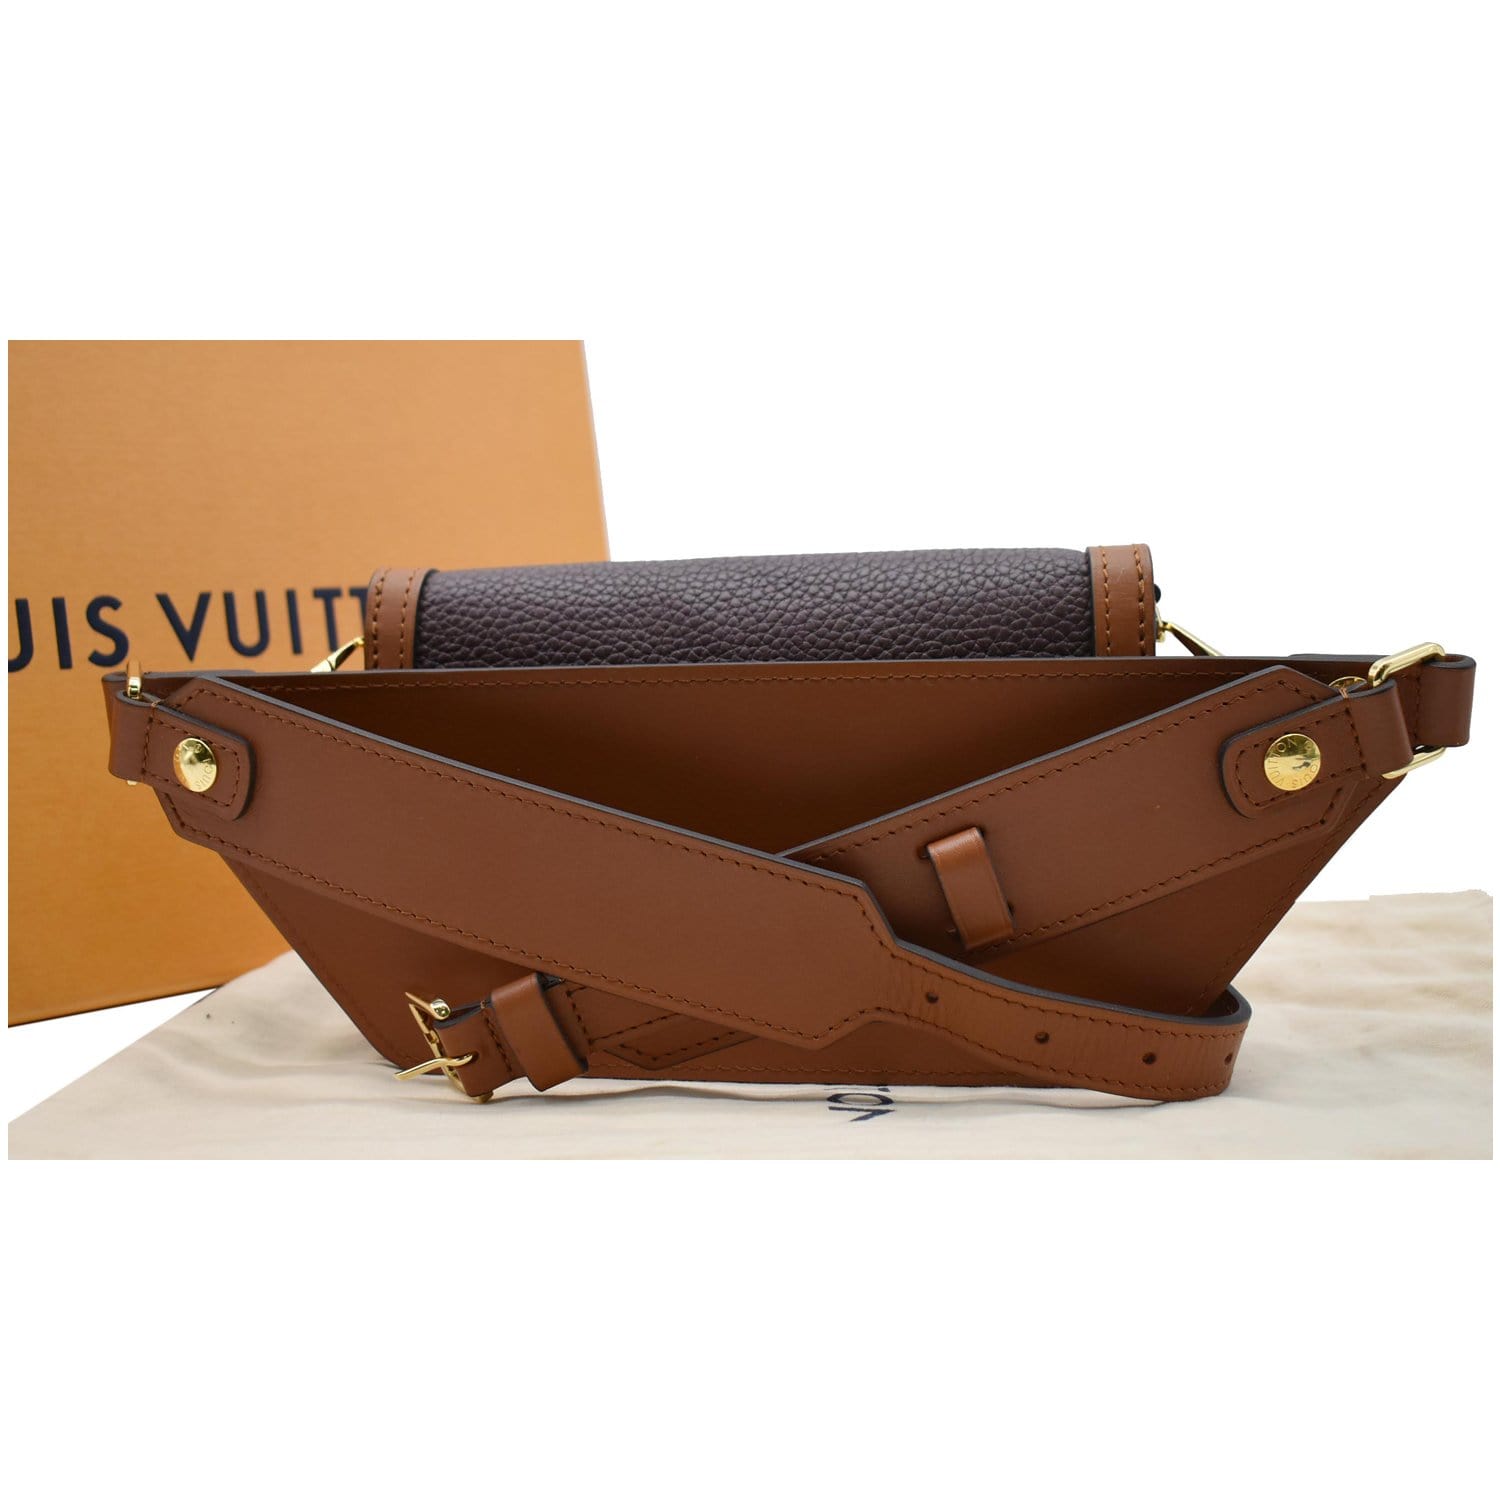 Dauphine belt bag leather handbag Louis Vuitton Brown in Leather